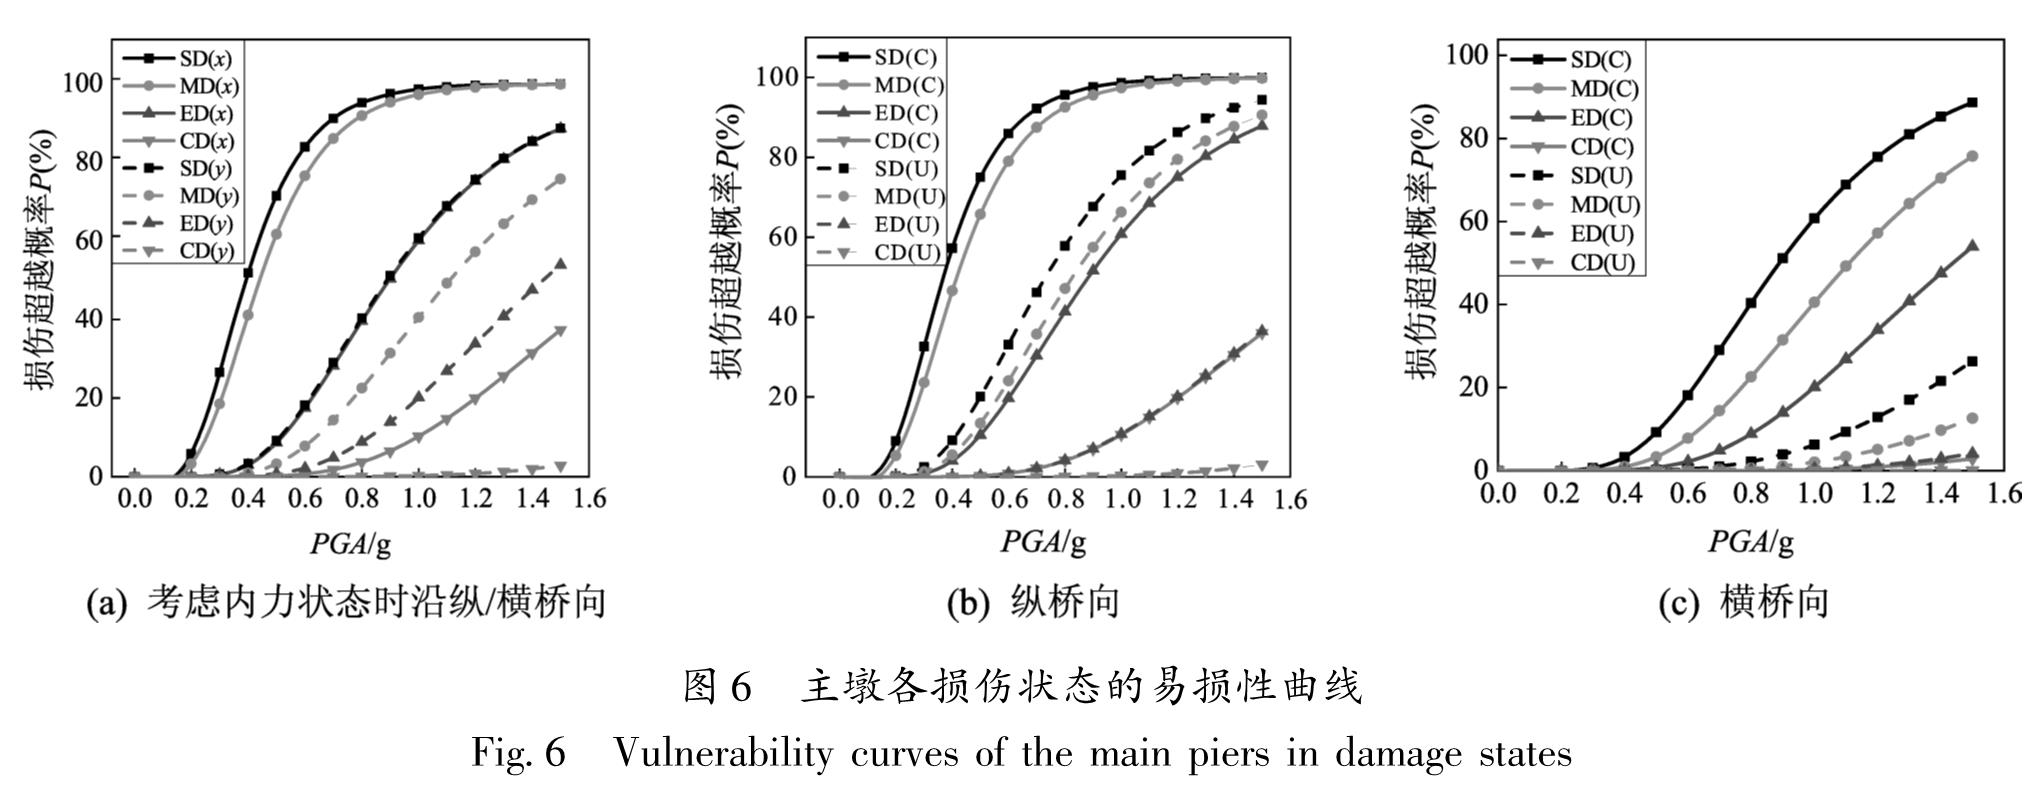 图6 主墩各损伤状态的易损性曲线<br/>Fig.6 Vulnerability curves of the main piers in damage states